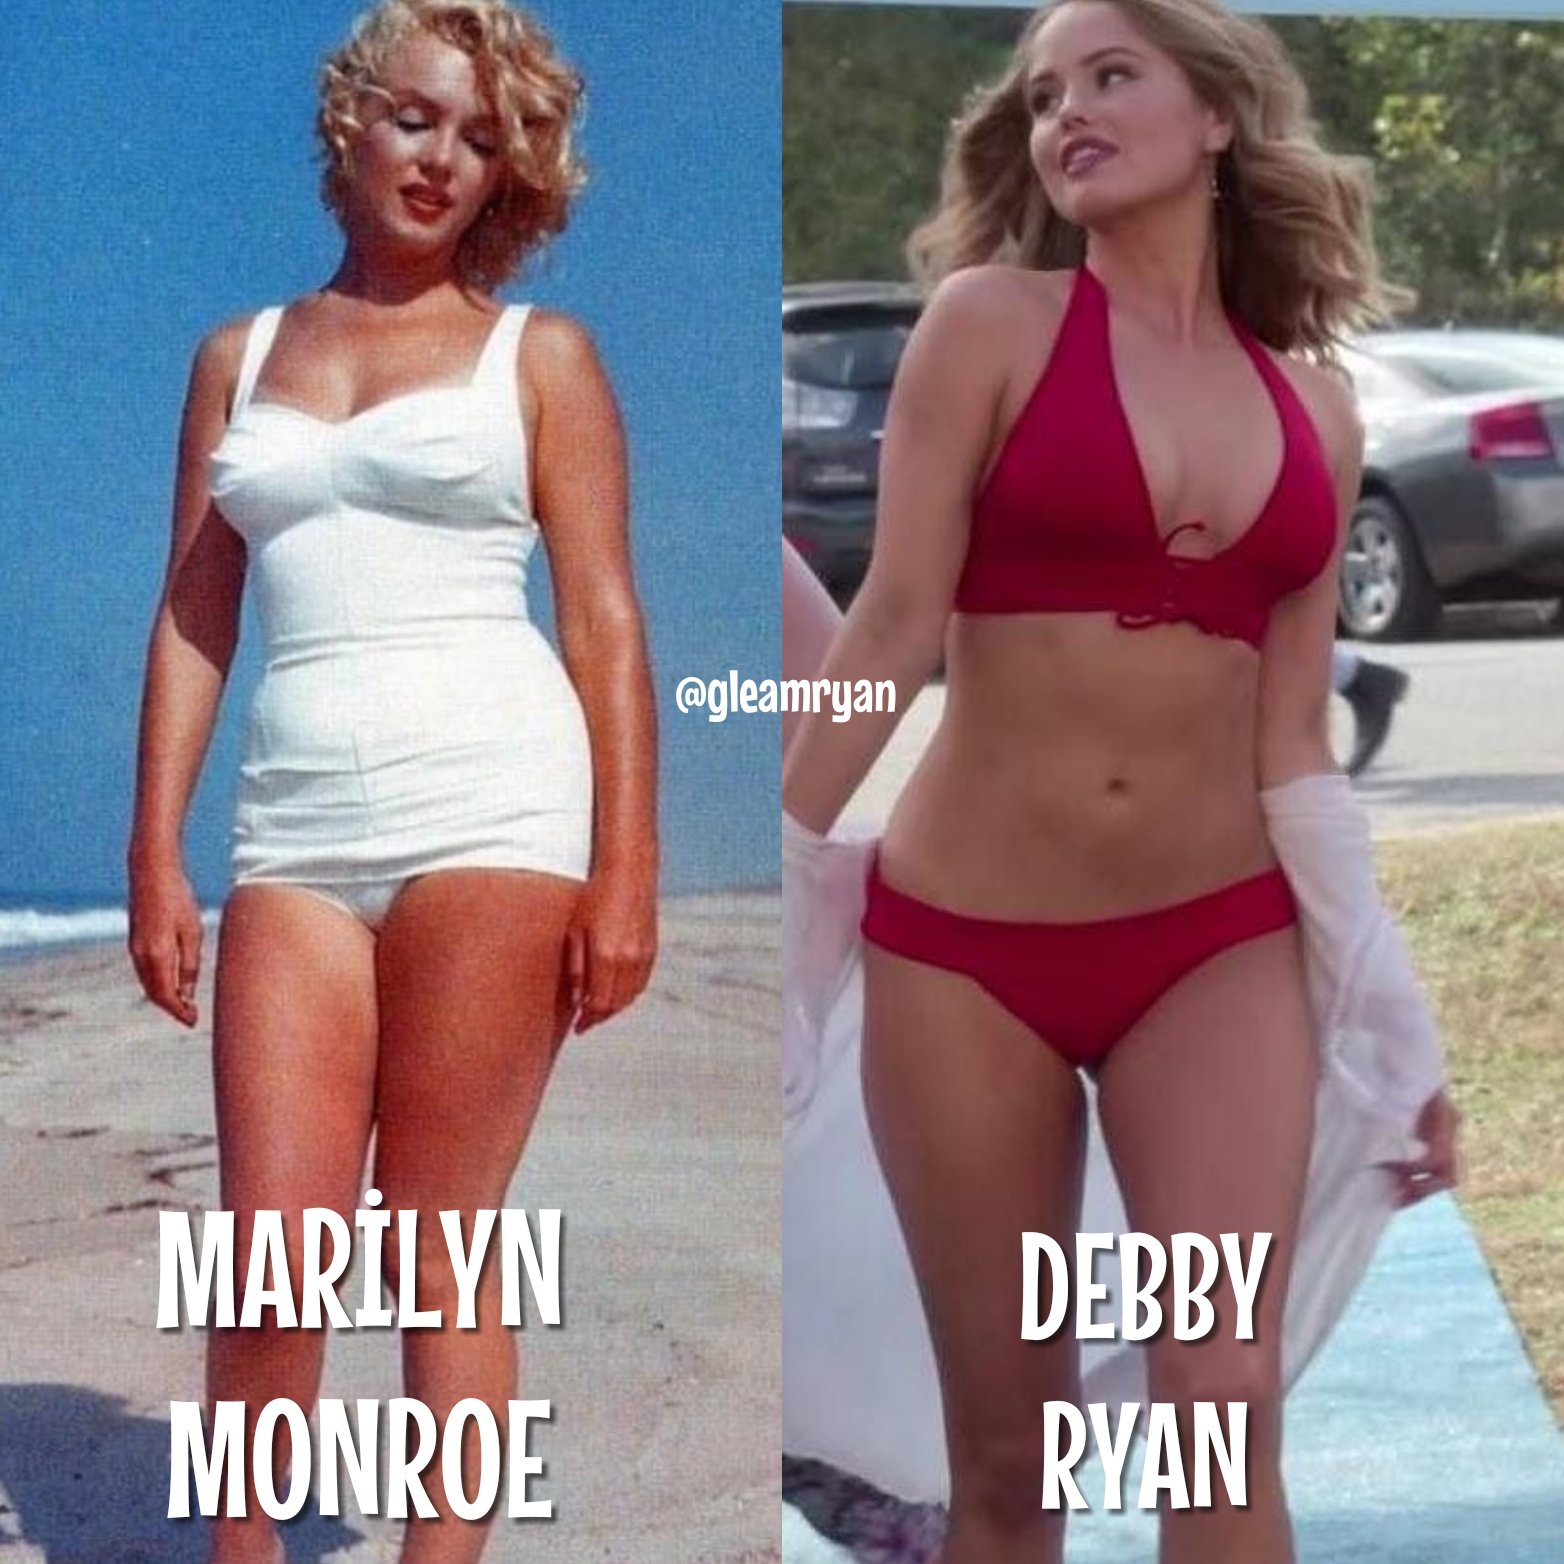 debby Ryan on Twitter: "Your Marilyn Monroe @MarilynMonroe / My Marilyn  Monroe @DebbyRyan https://t.co/szFG1iljk8" / Twitter